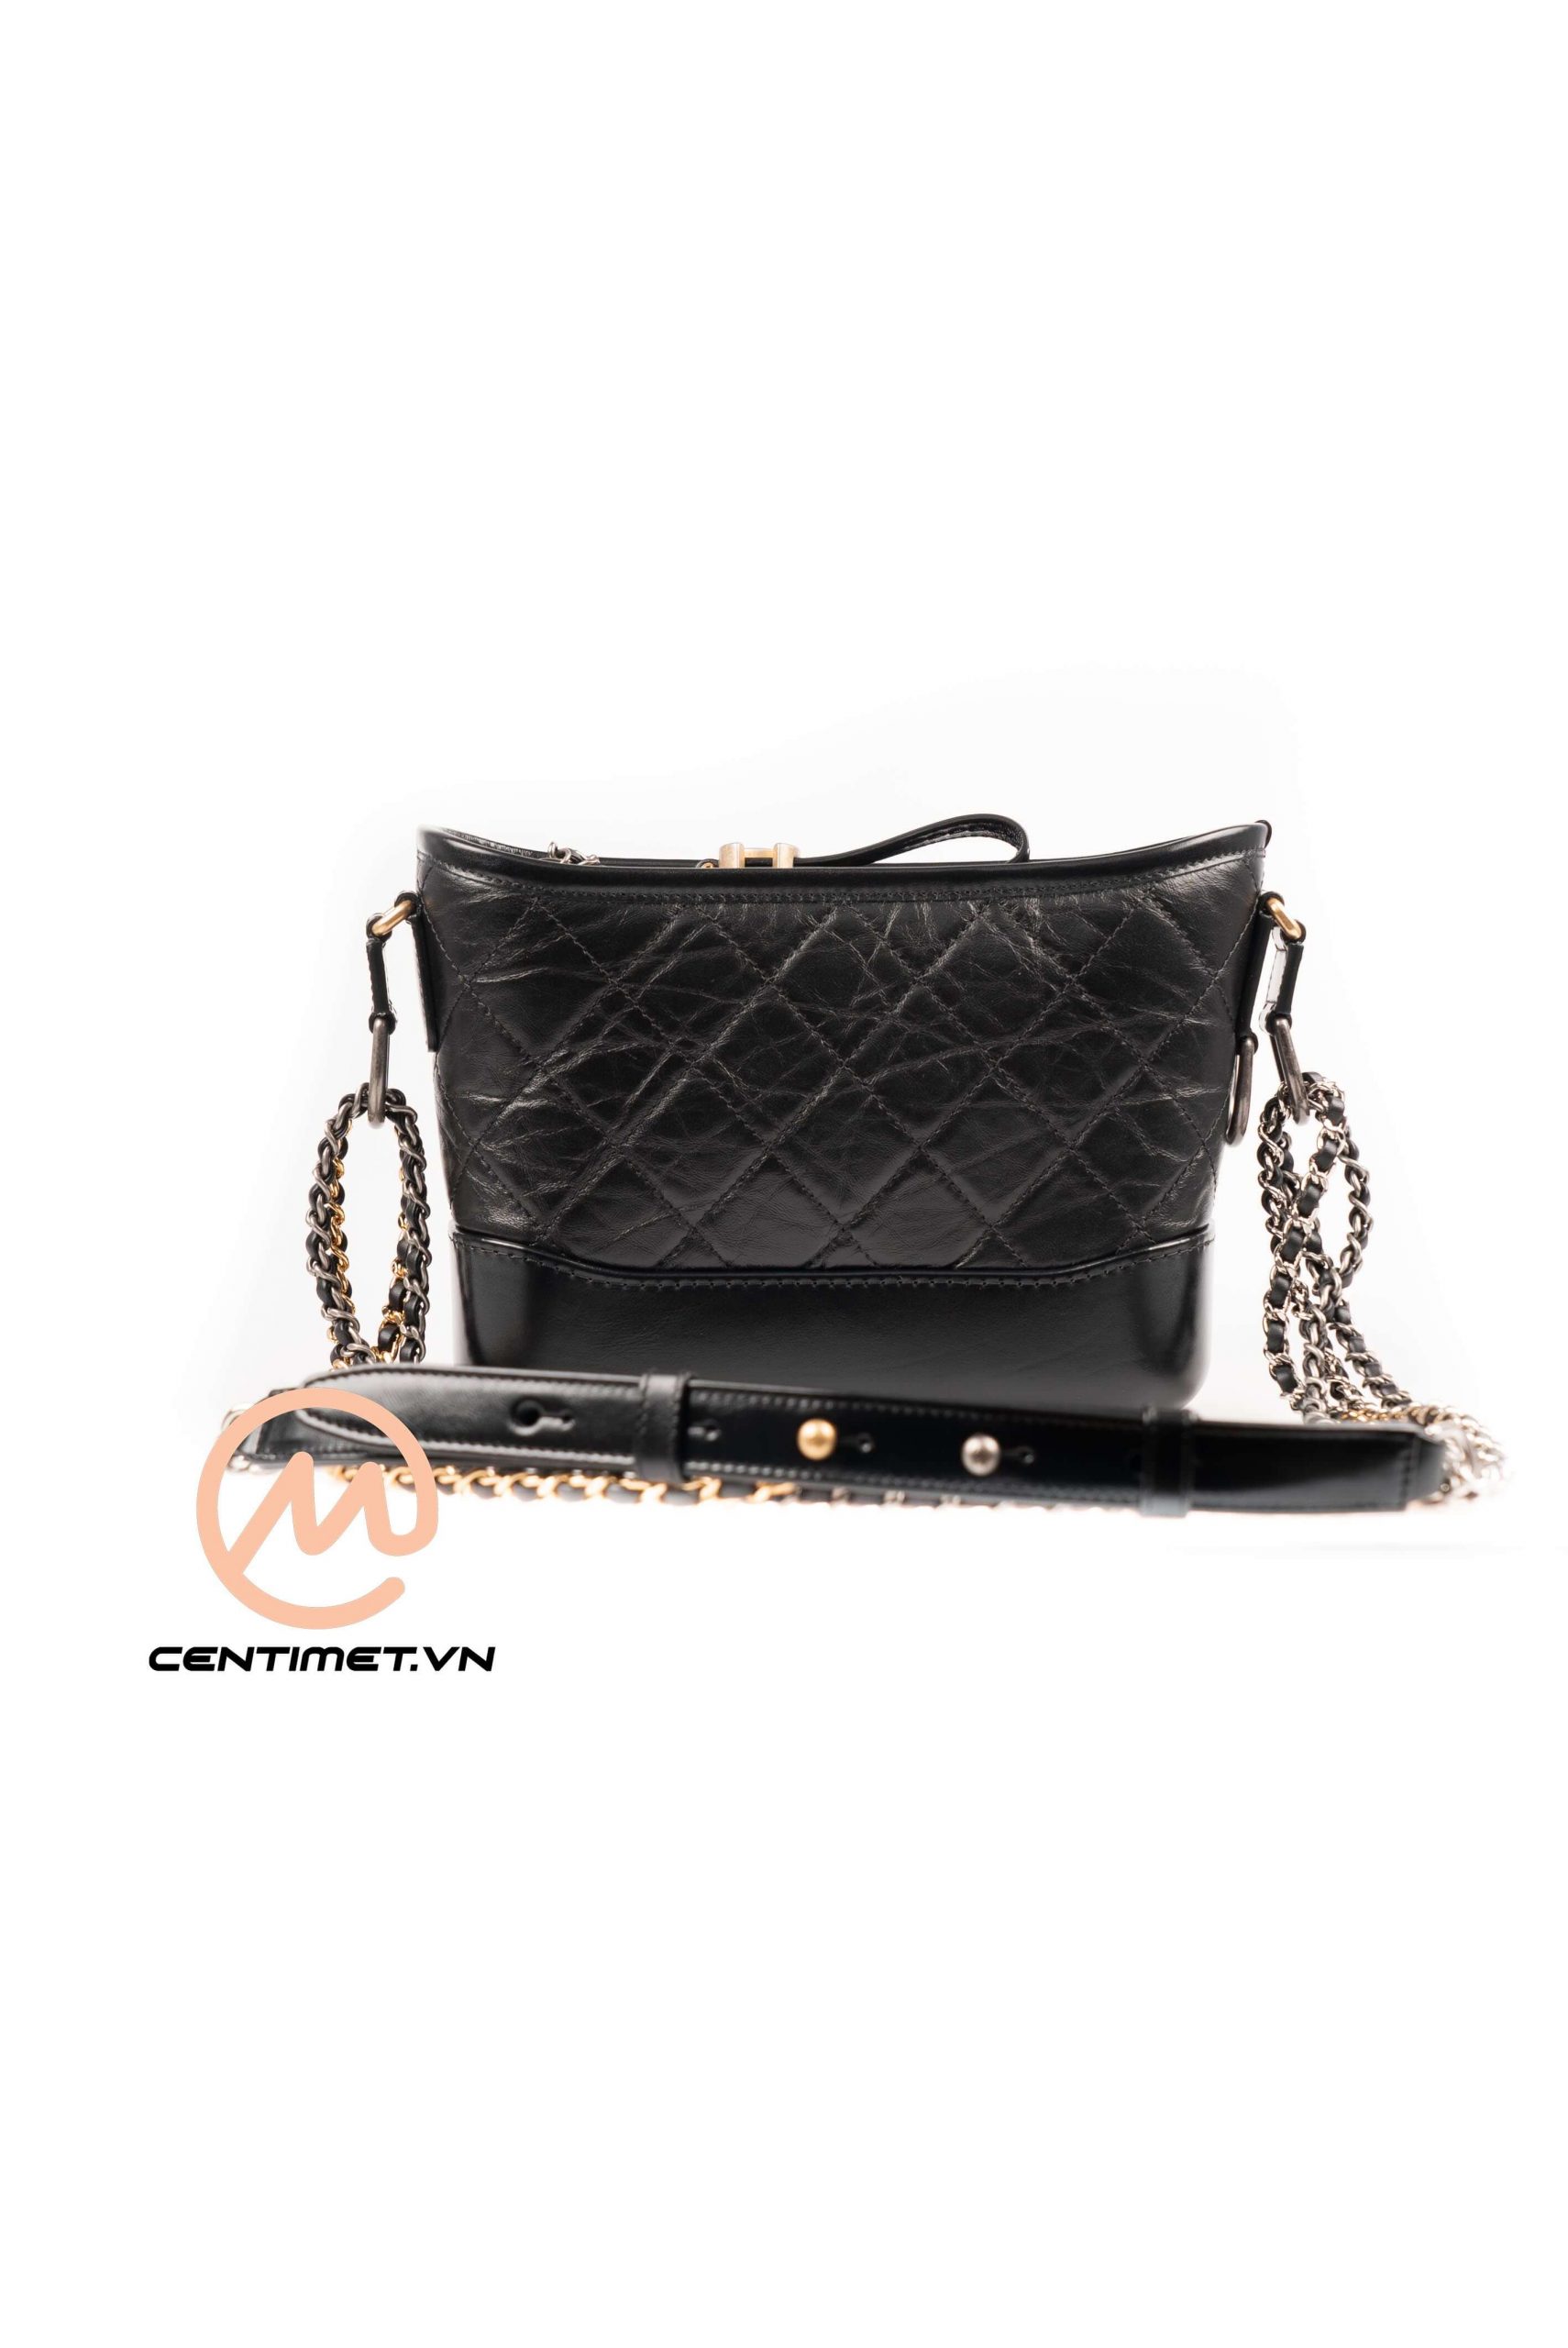 Túi Chanel Gabrielle Small Hobo Bag màu đen calfskin best quality